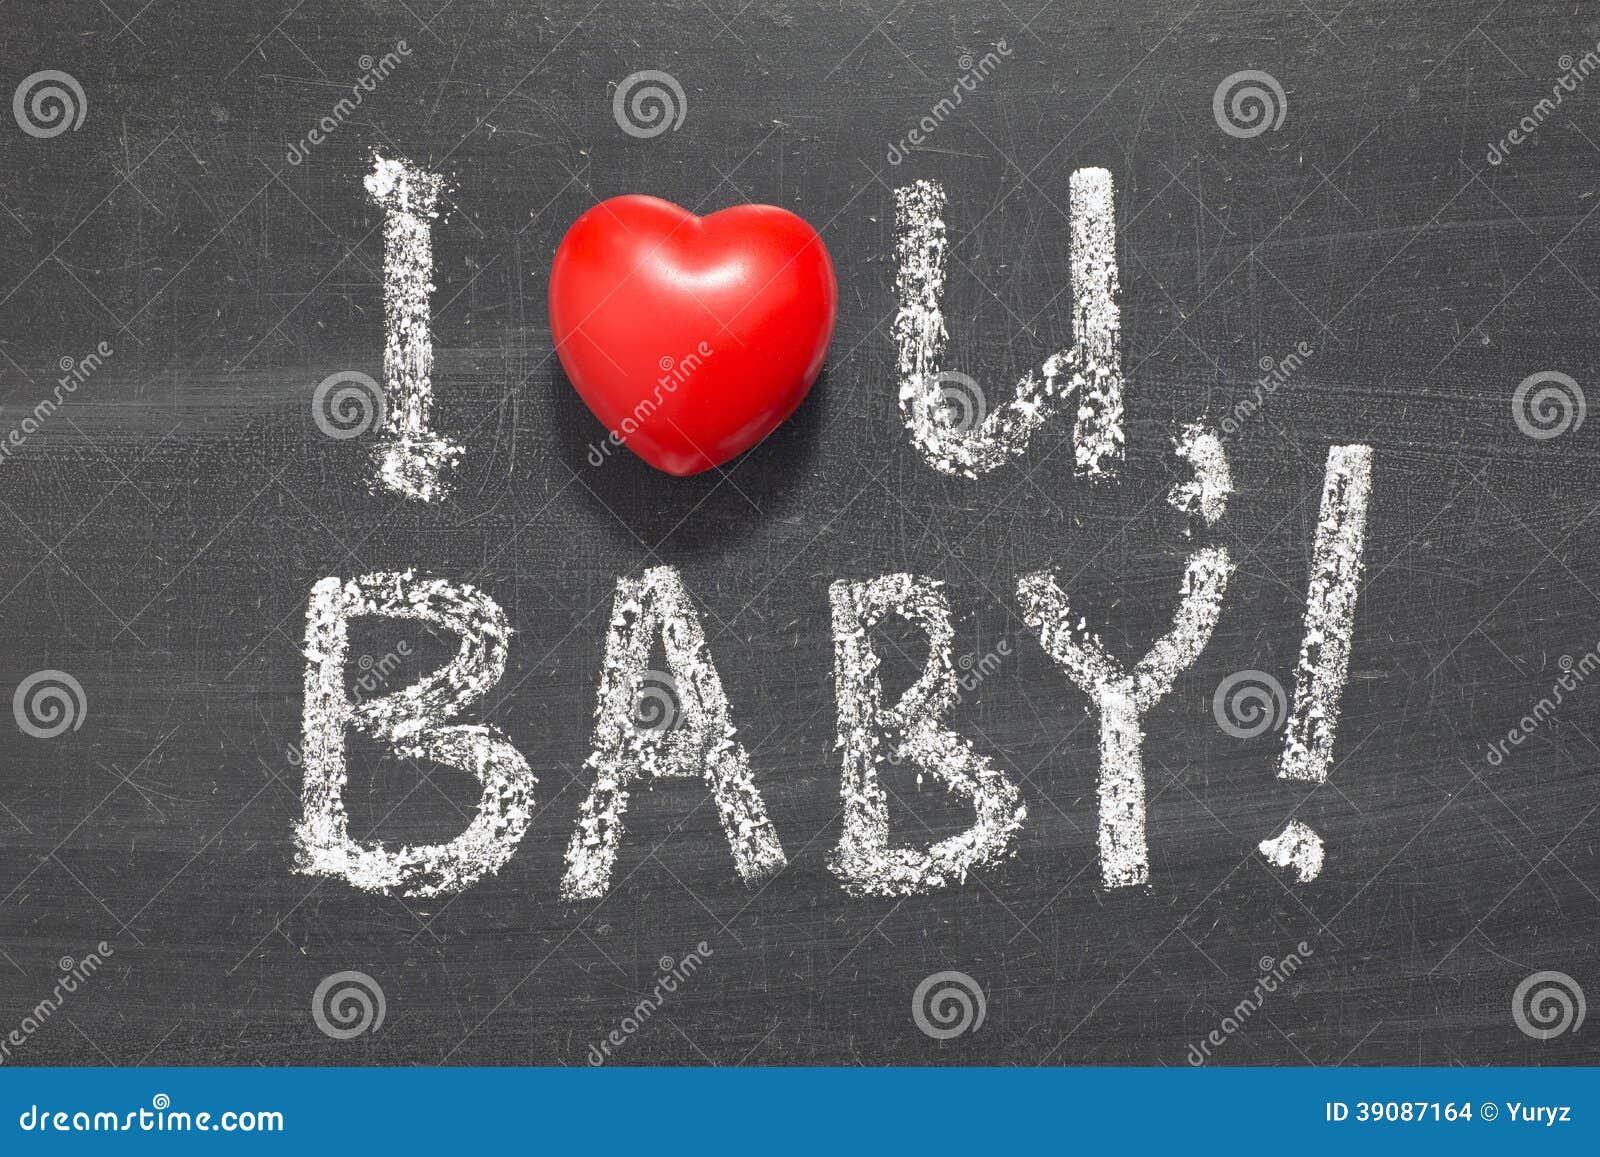 Ай лов ю Беби. I Love you Baby картинки. I Love you Baby рисунок. Надписи i Love you Бэйби. Лова лова ай лав